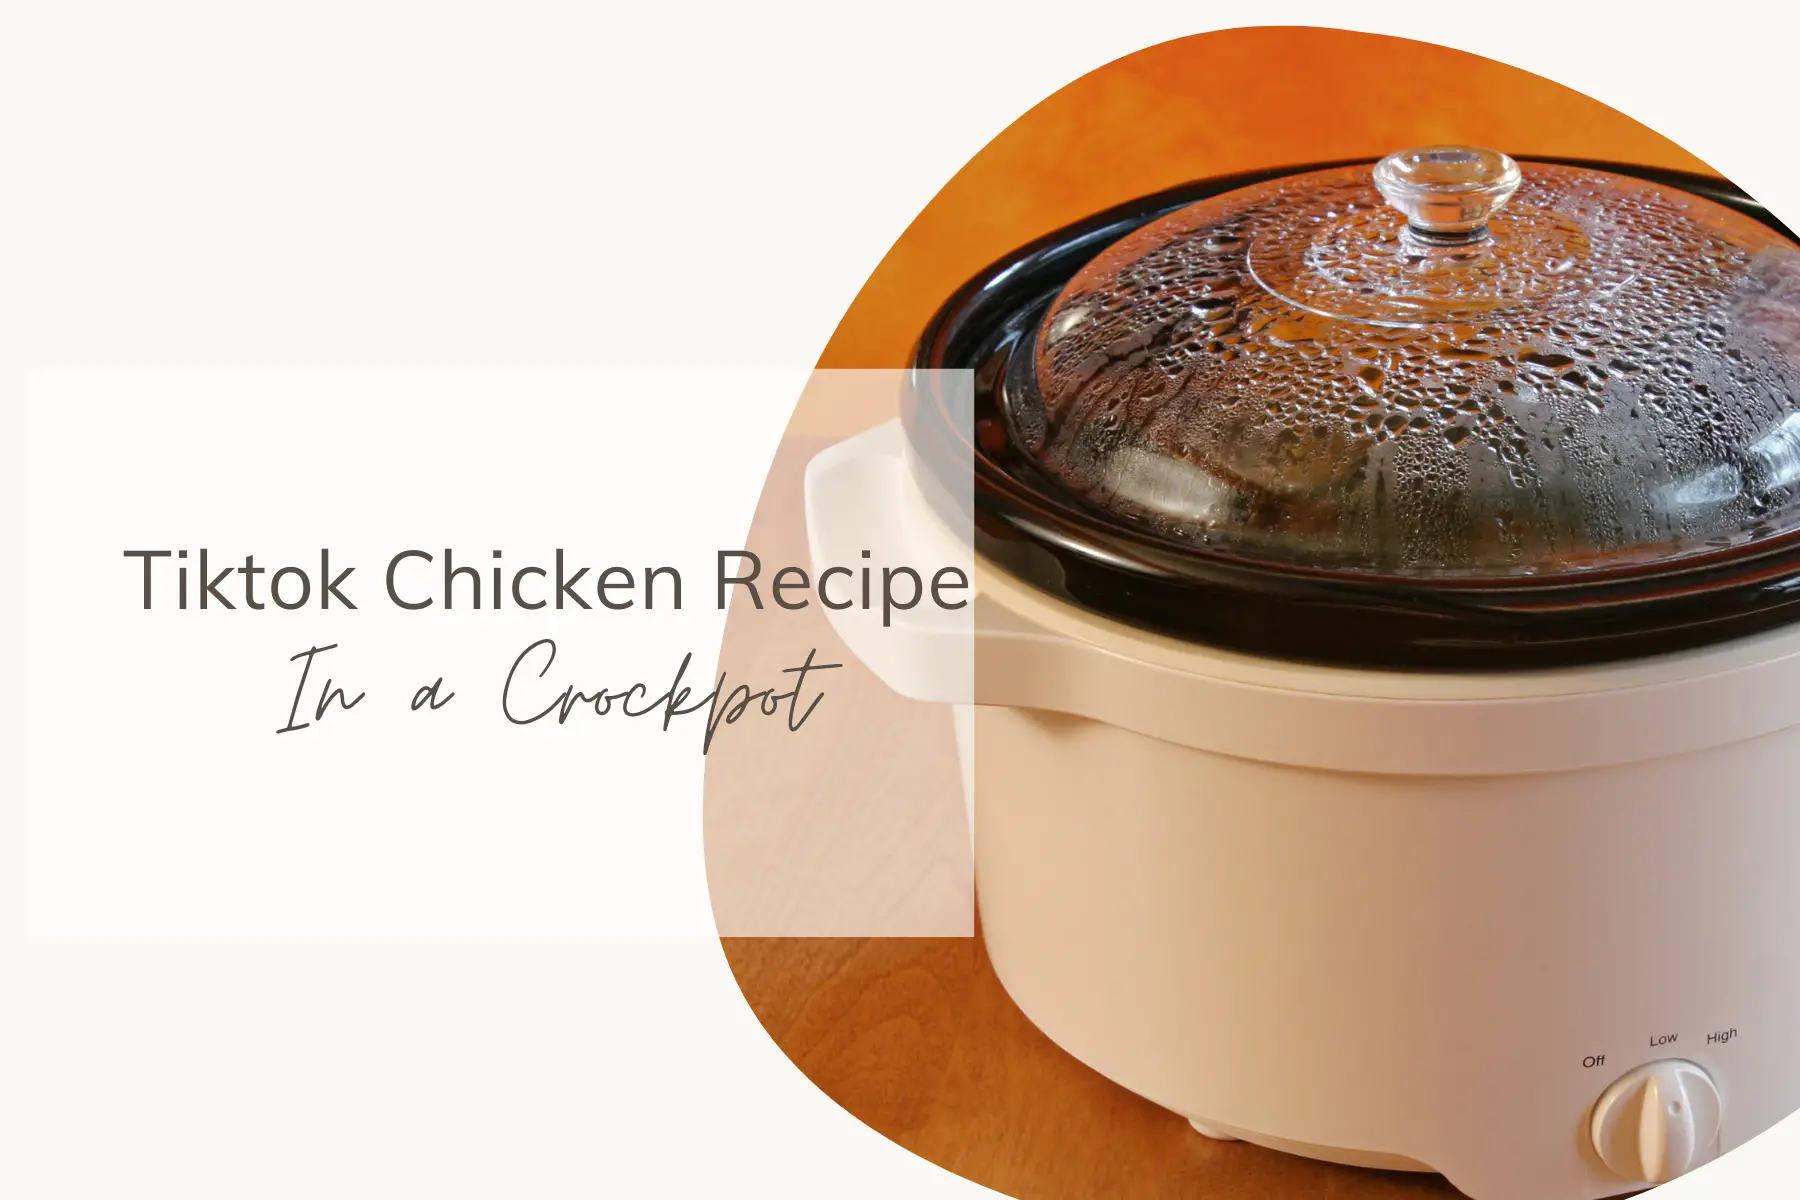 Tiktok Chicken Recipe in a Crockpot